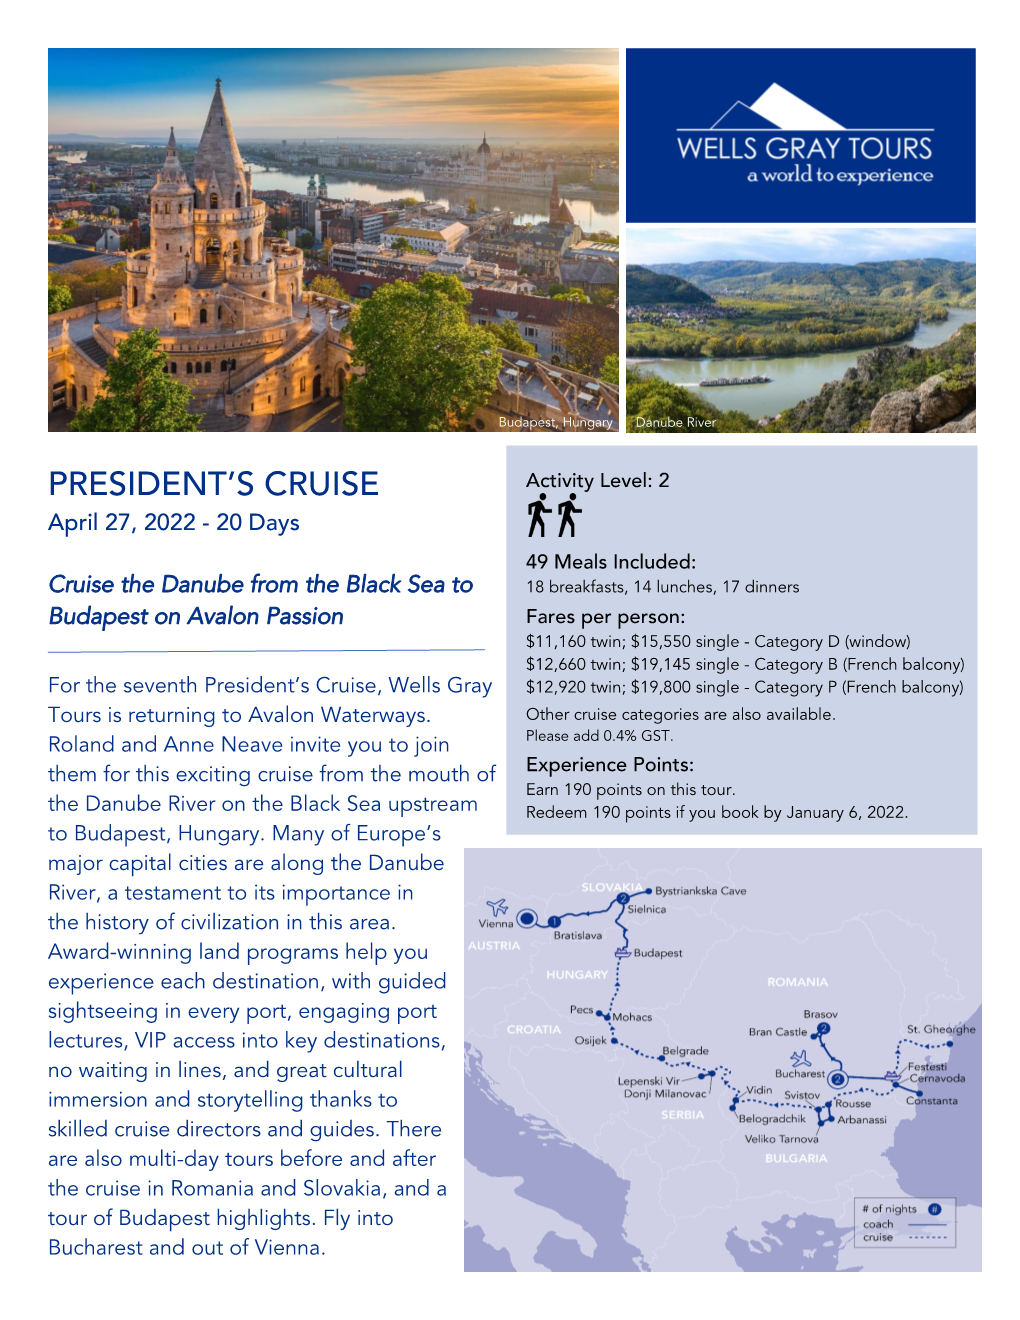 President's Cruise on the Danube